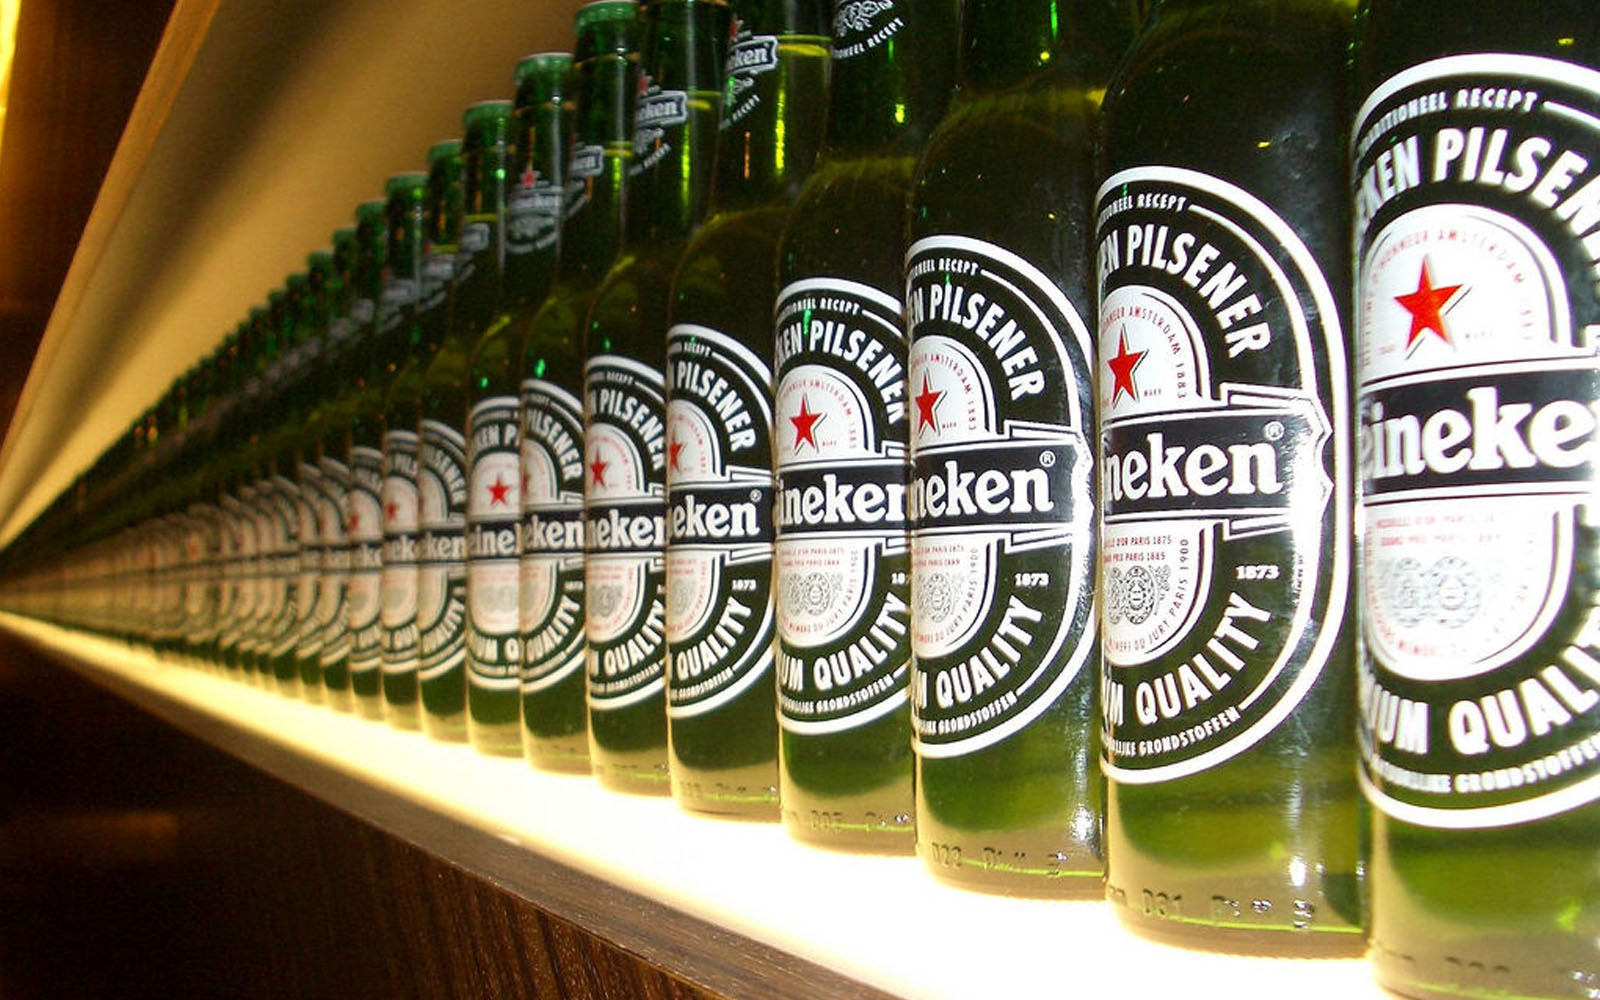 Heineken may raise prices of Beer, as uncertainty surrounds tax increase